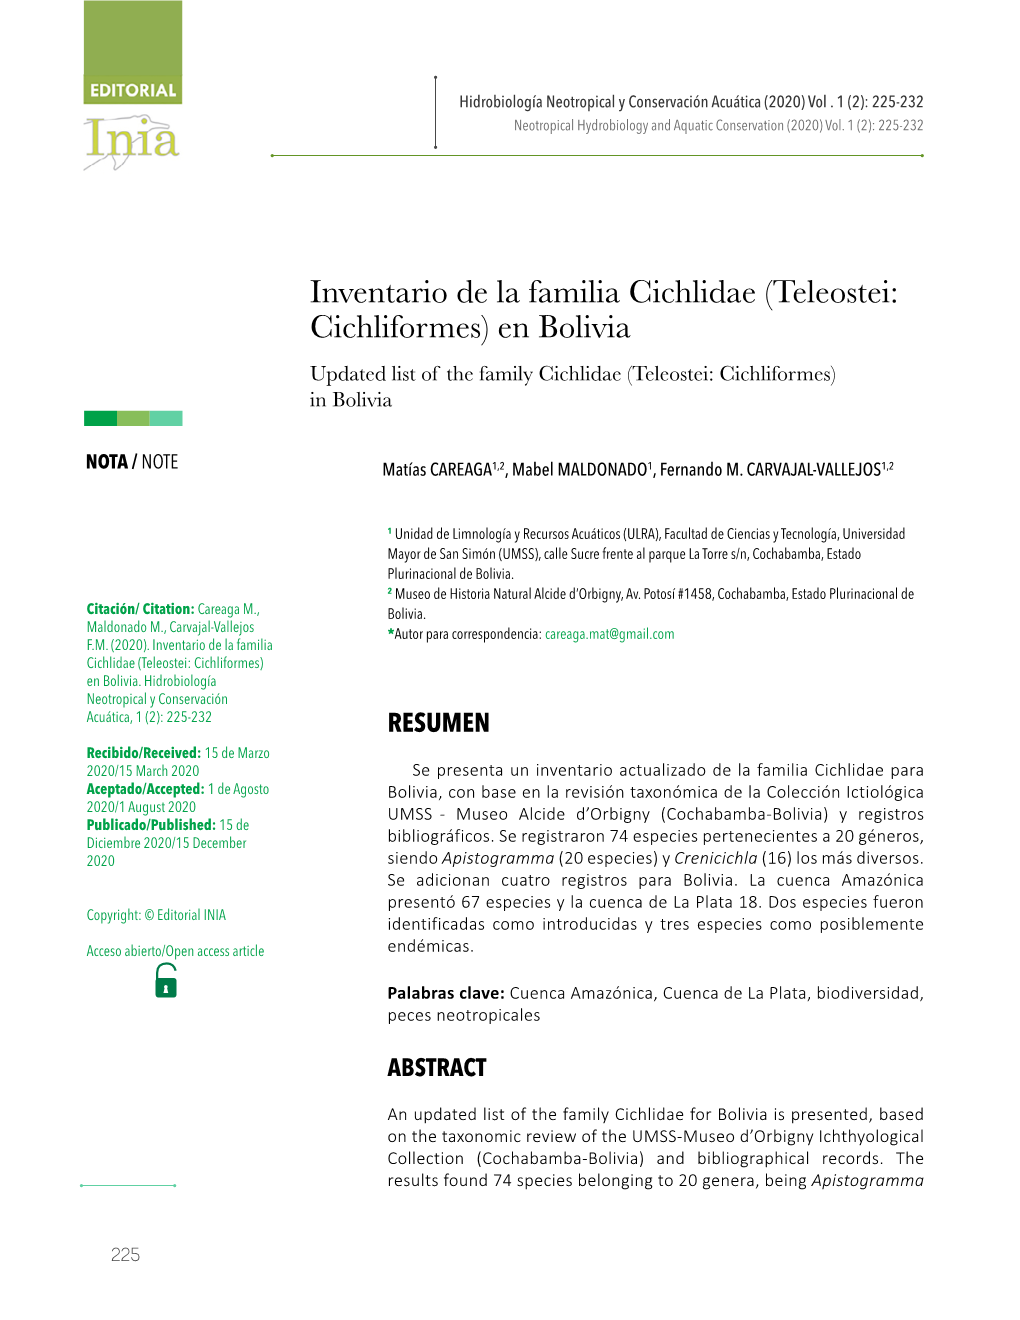 Inventario De La Familia Cichlidae (Teleostei: Cichliformes) En Bolivia Updated List of the Family Cichlidae (Teleostei: Cichliformes) in Bolivia